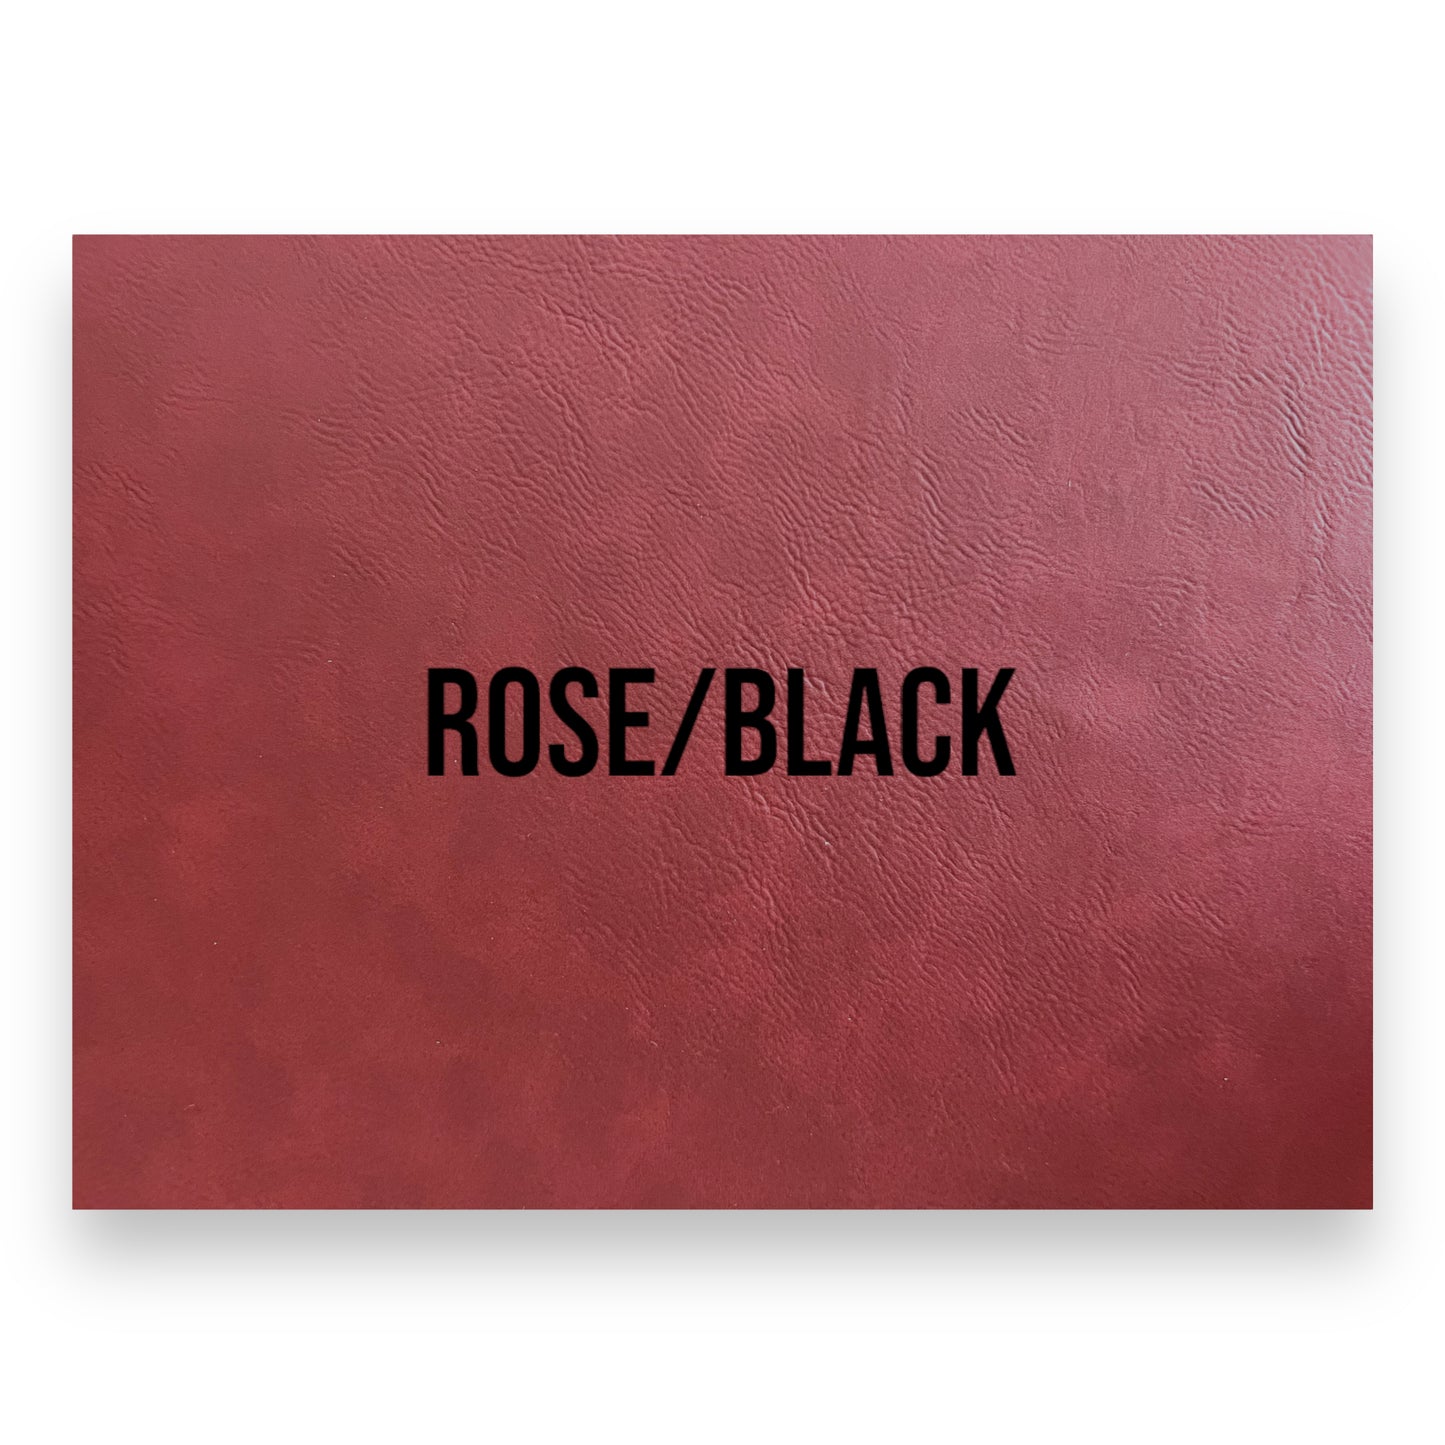 ROSE/BLACK HYDBOND’D LEATHERETTE SHEET (12"x24")